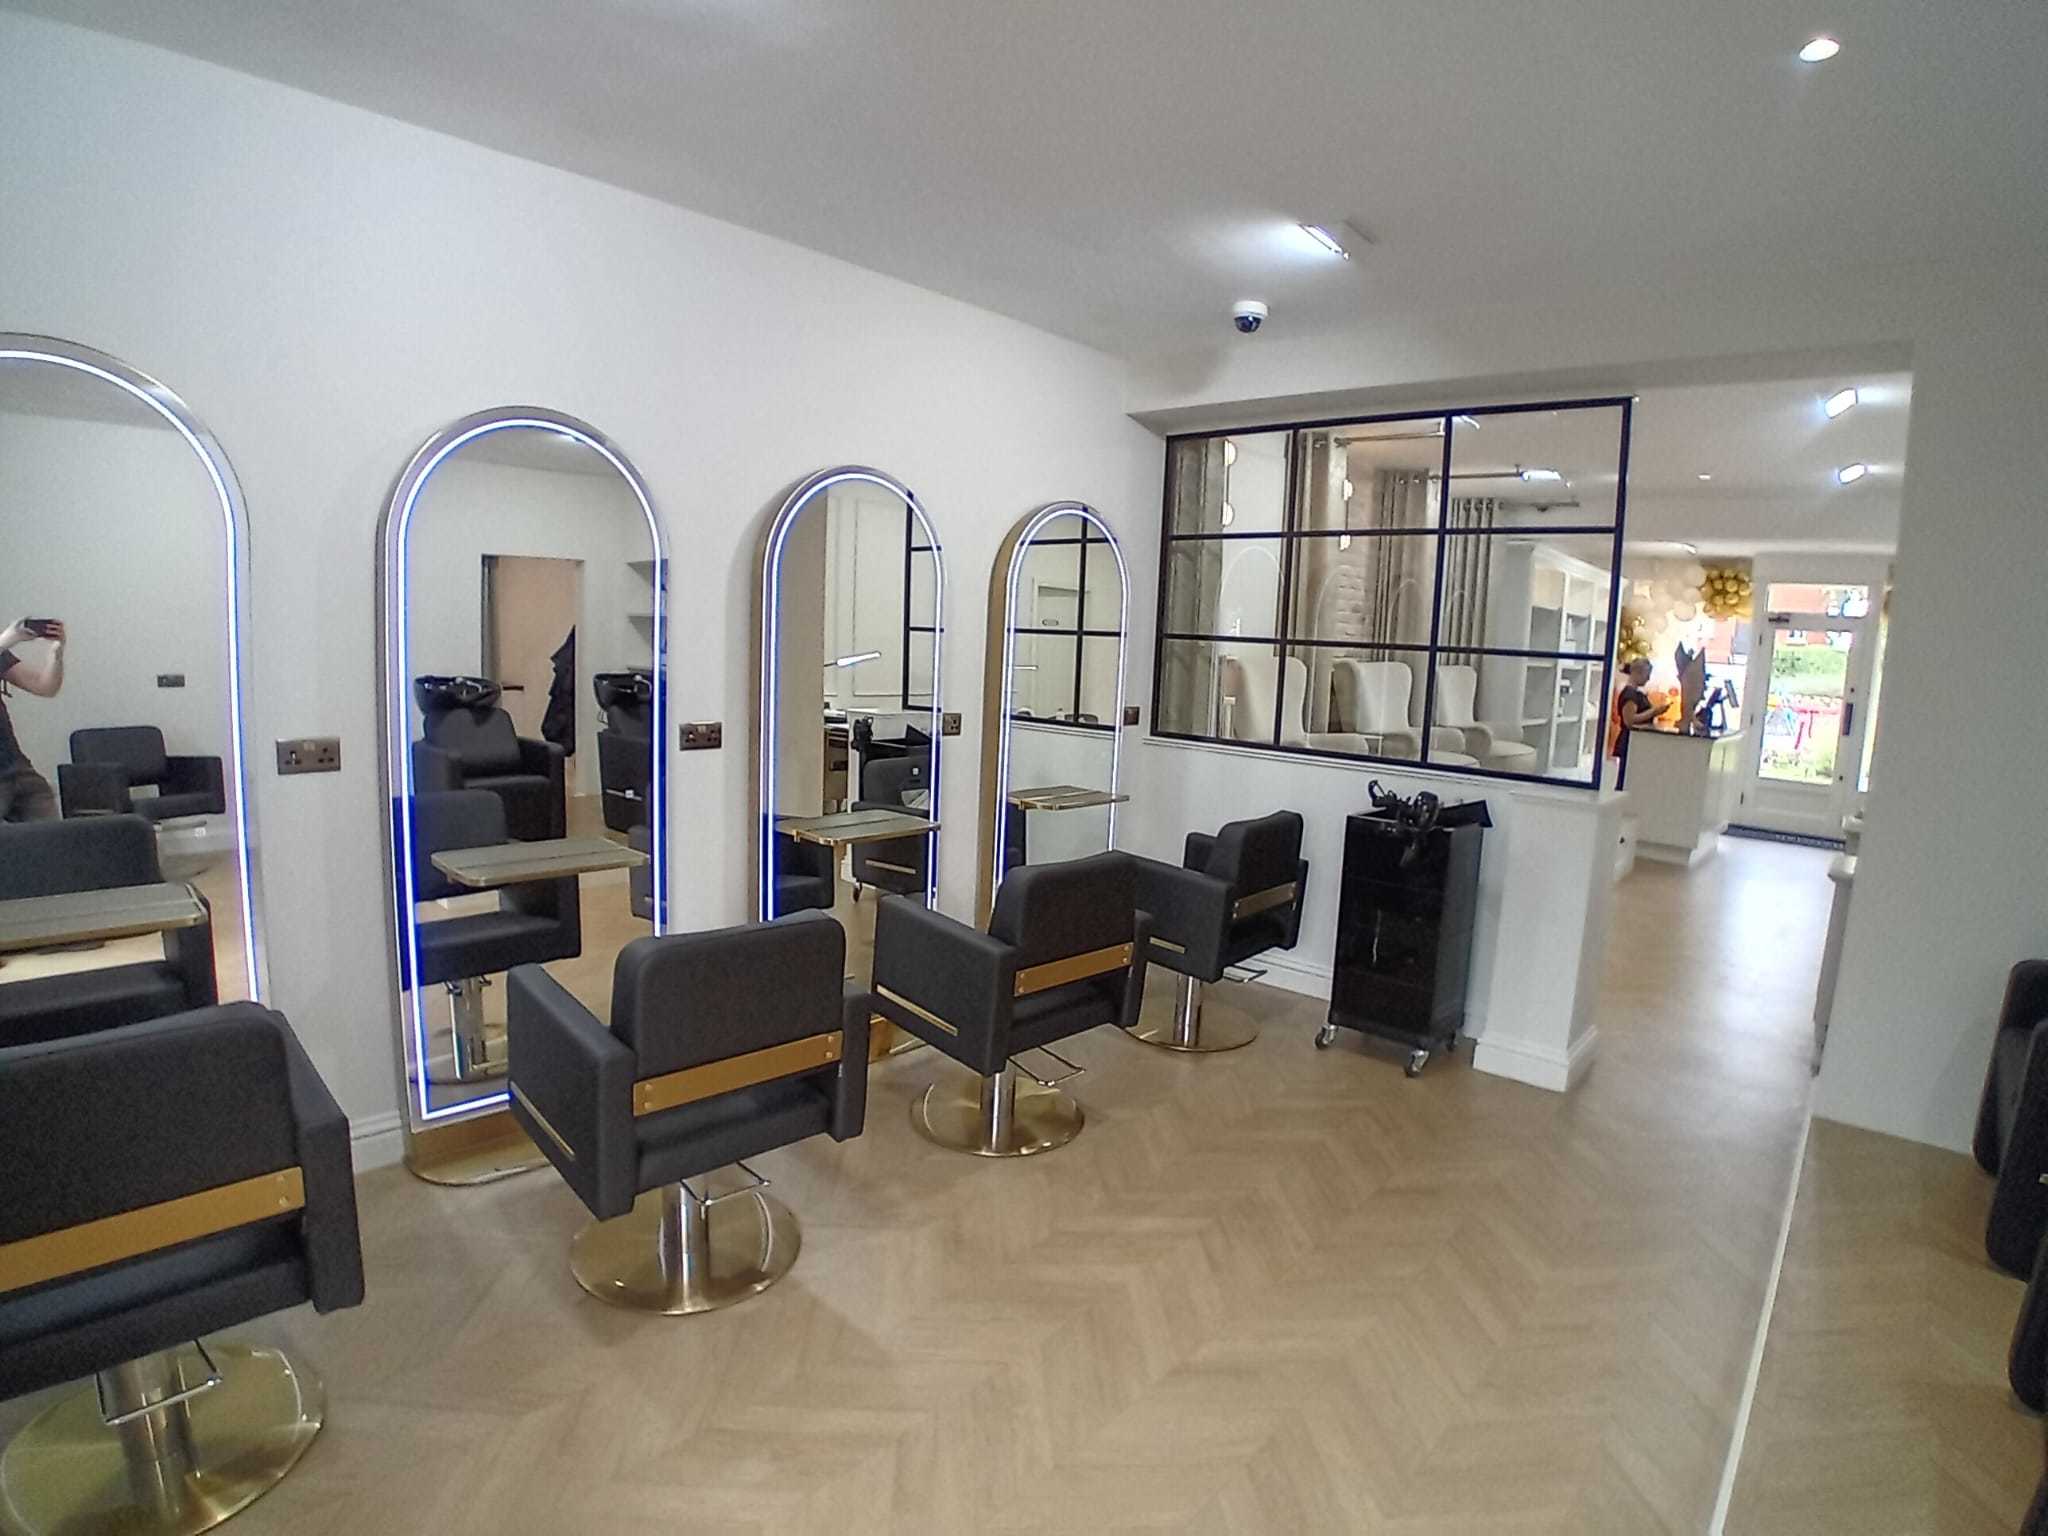 Inside the new salon